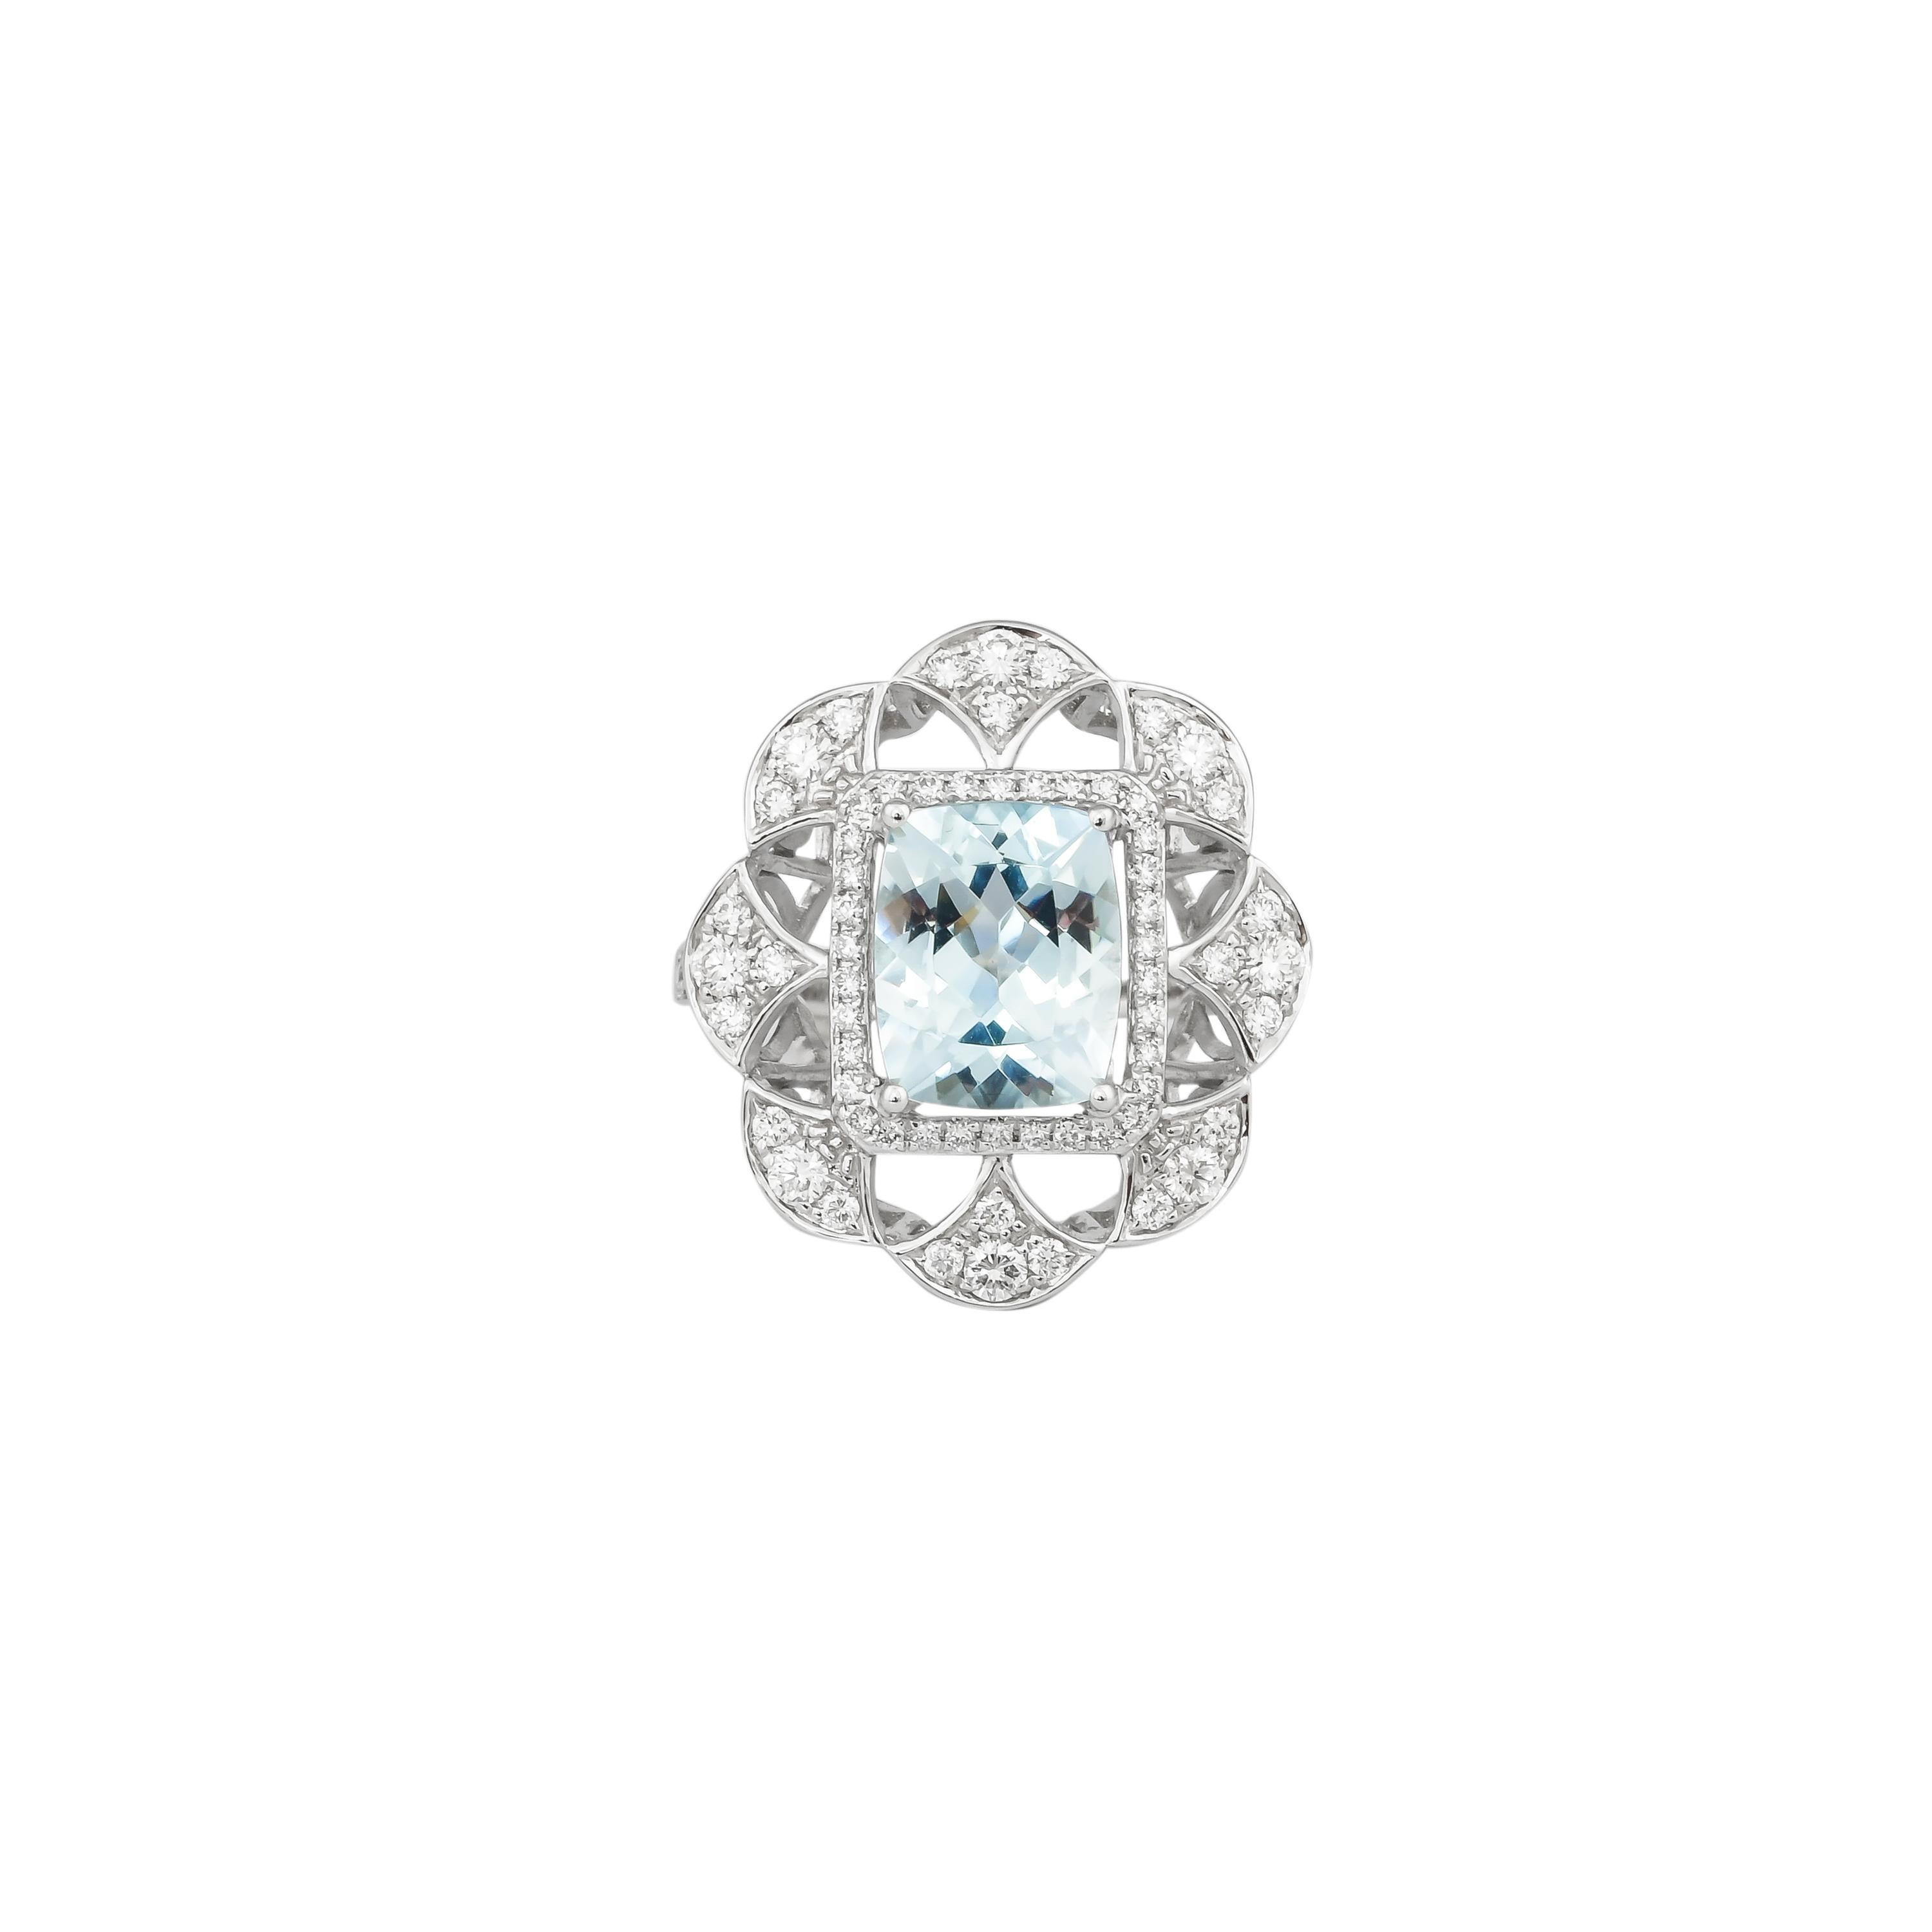 Cushion Cut 2.4 Carat Aquamarine and Diamond Ring in 18 Karat White Gold For Sale